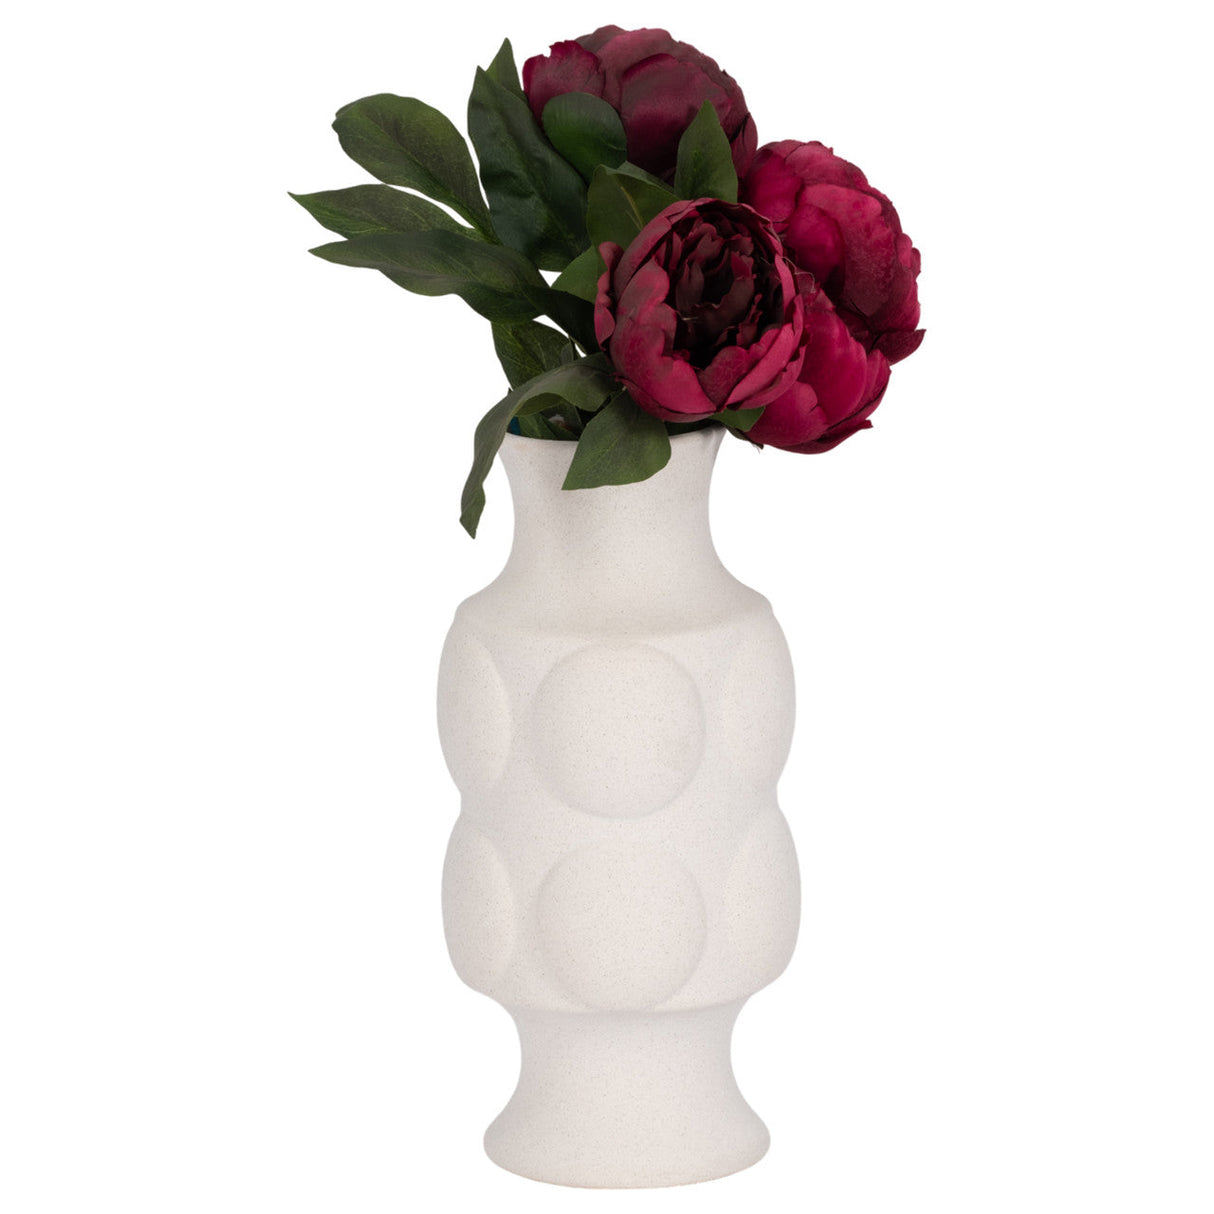 11" Large Dot Embossed Vase Sand Texture, White